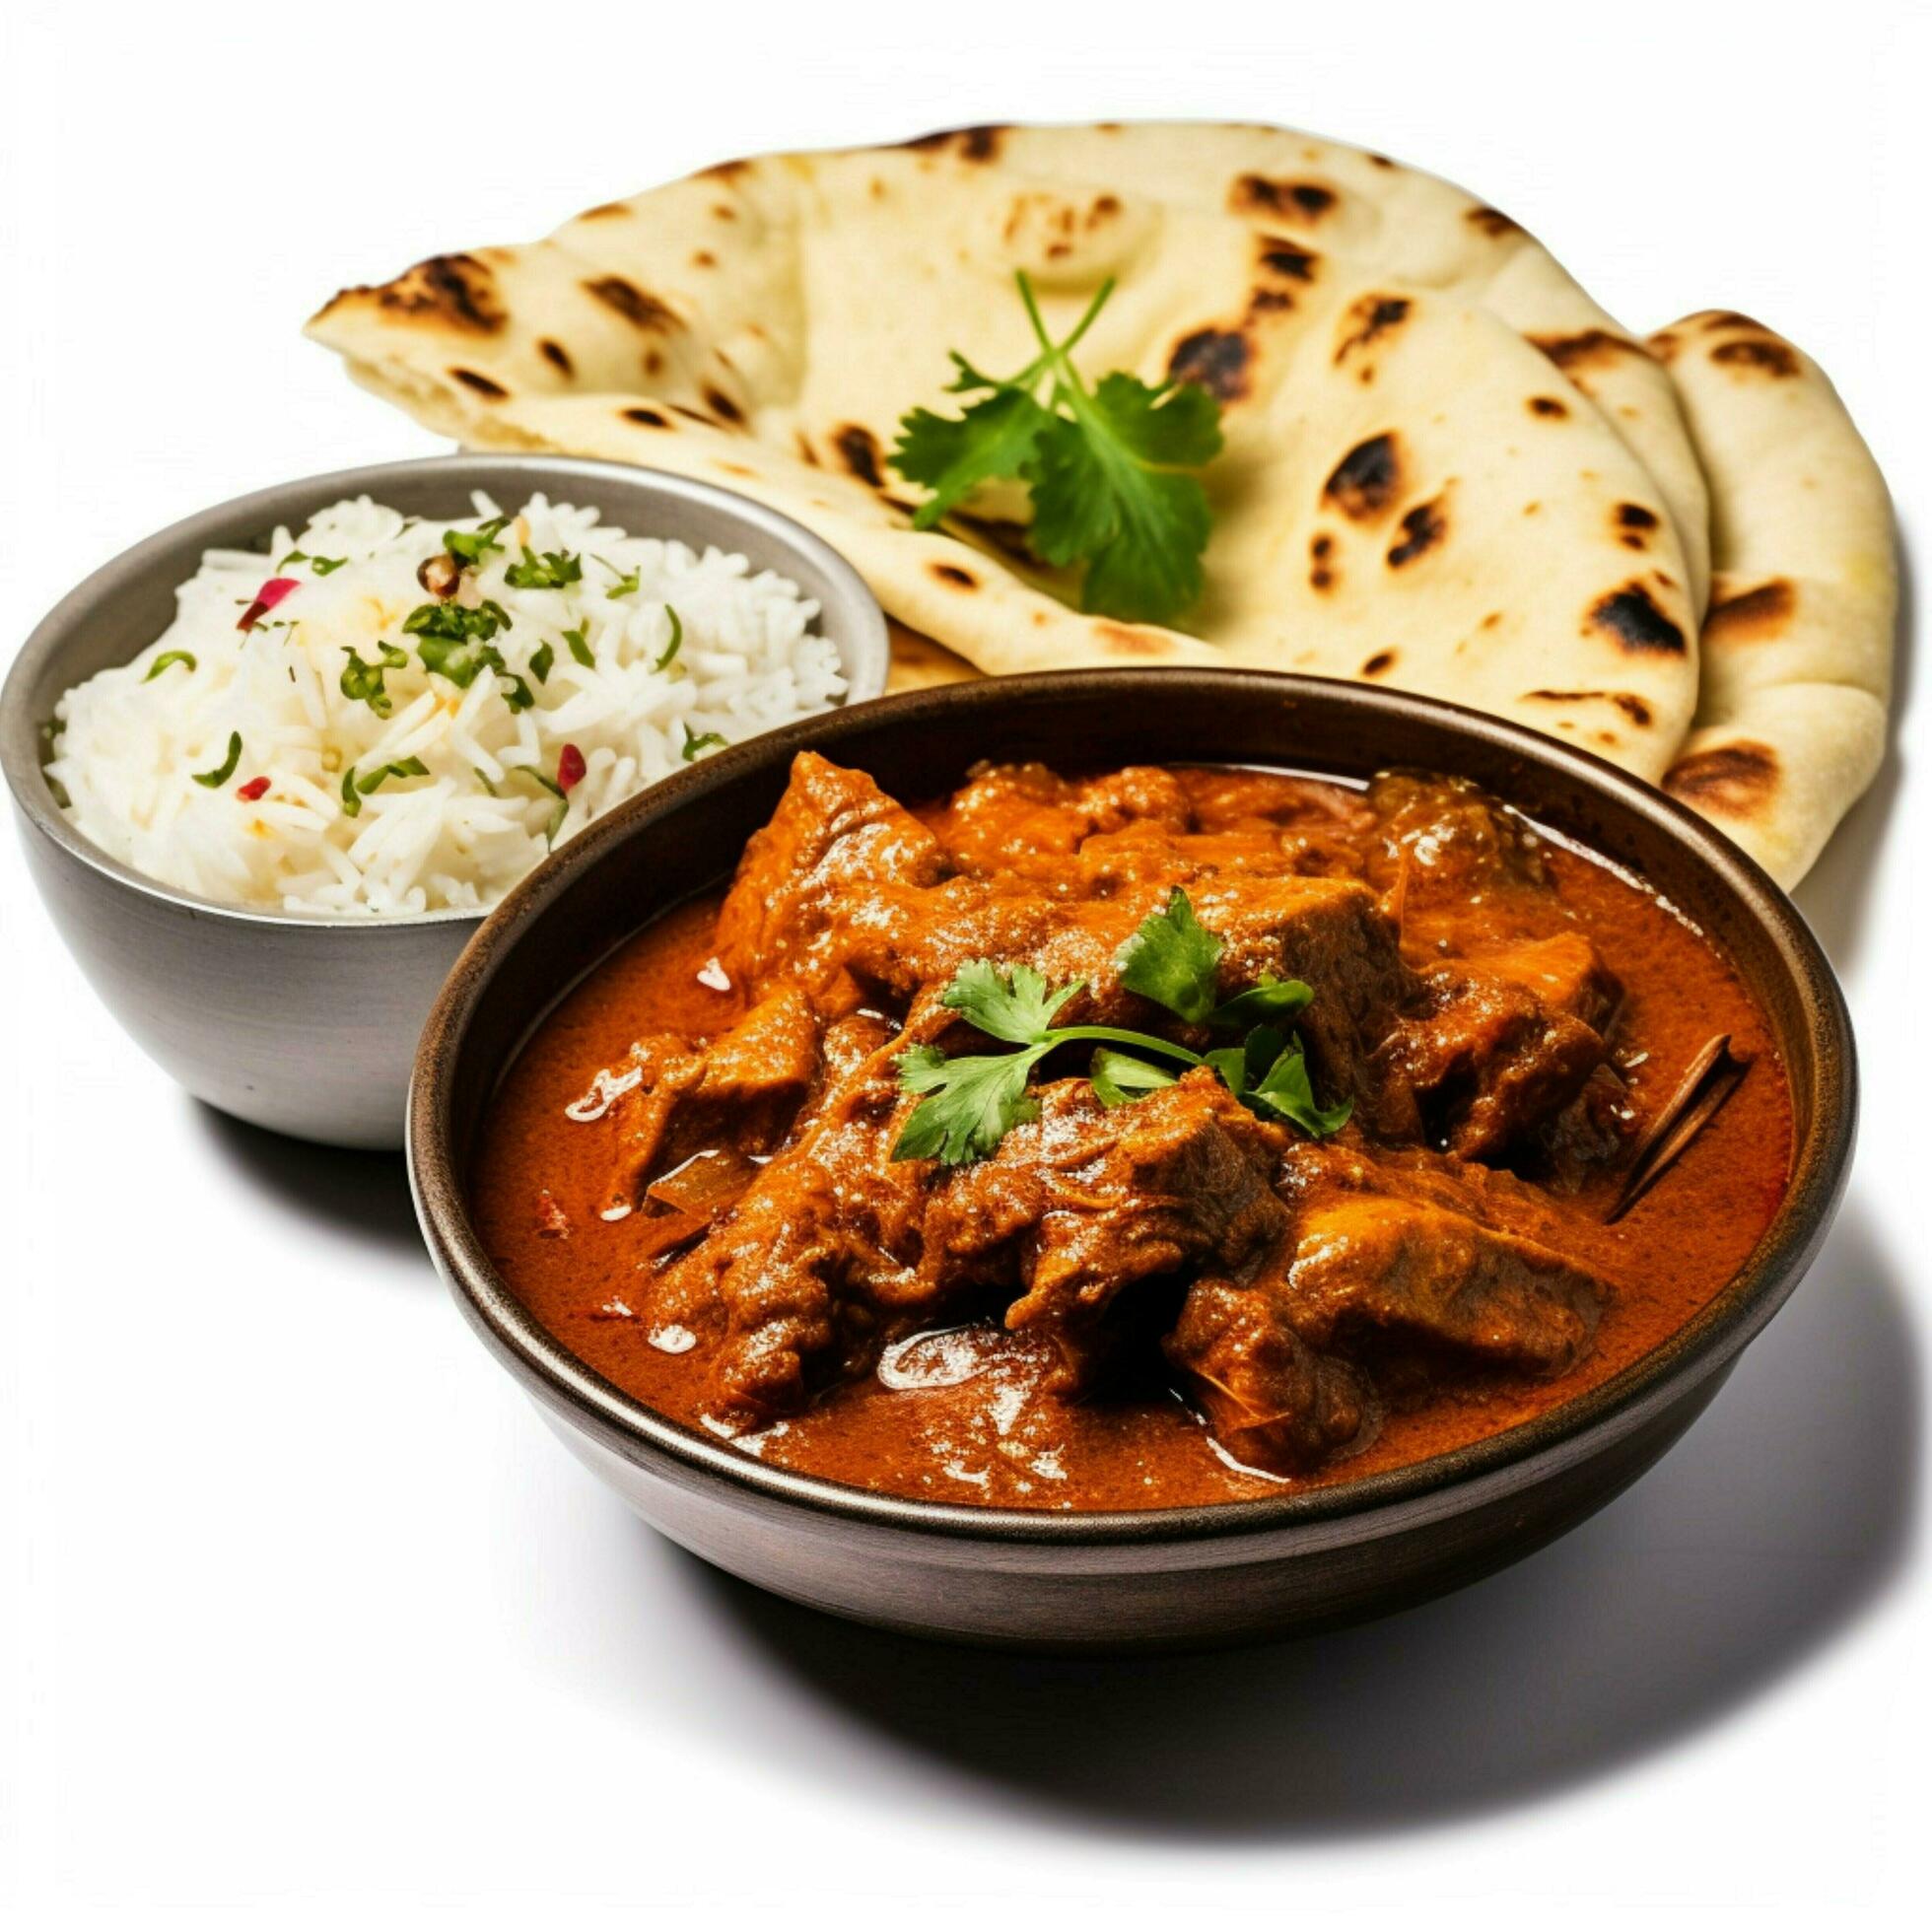 INDIAN FOOD Pork curry rogan josh with rice 30658762 Stock Photo